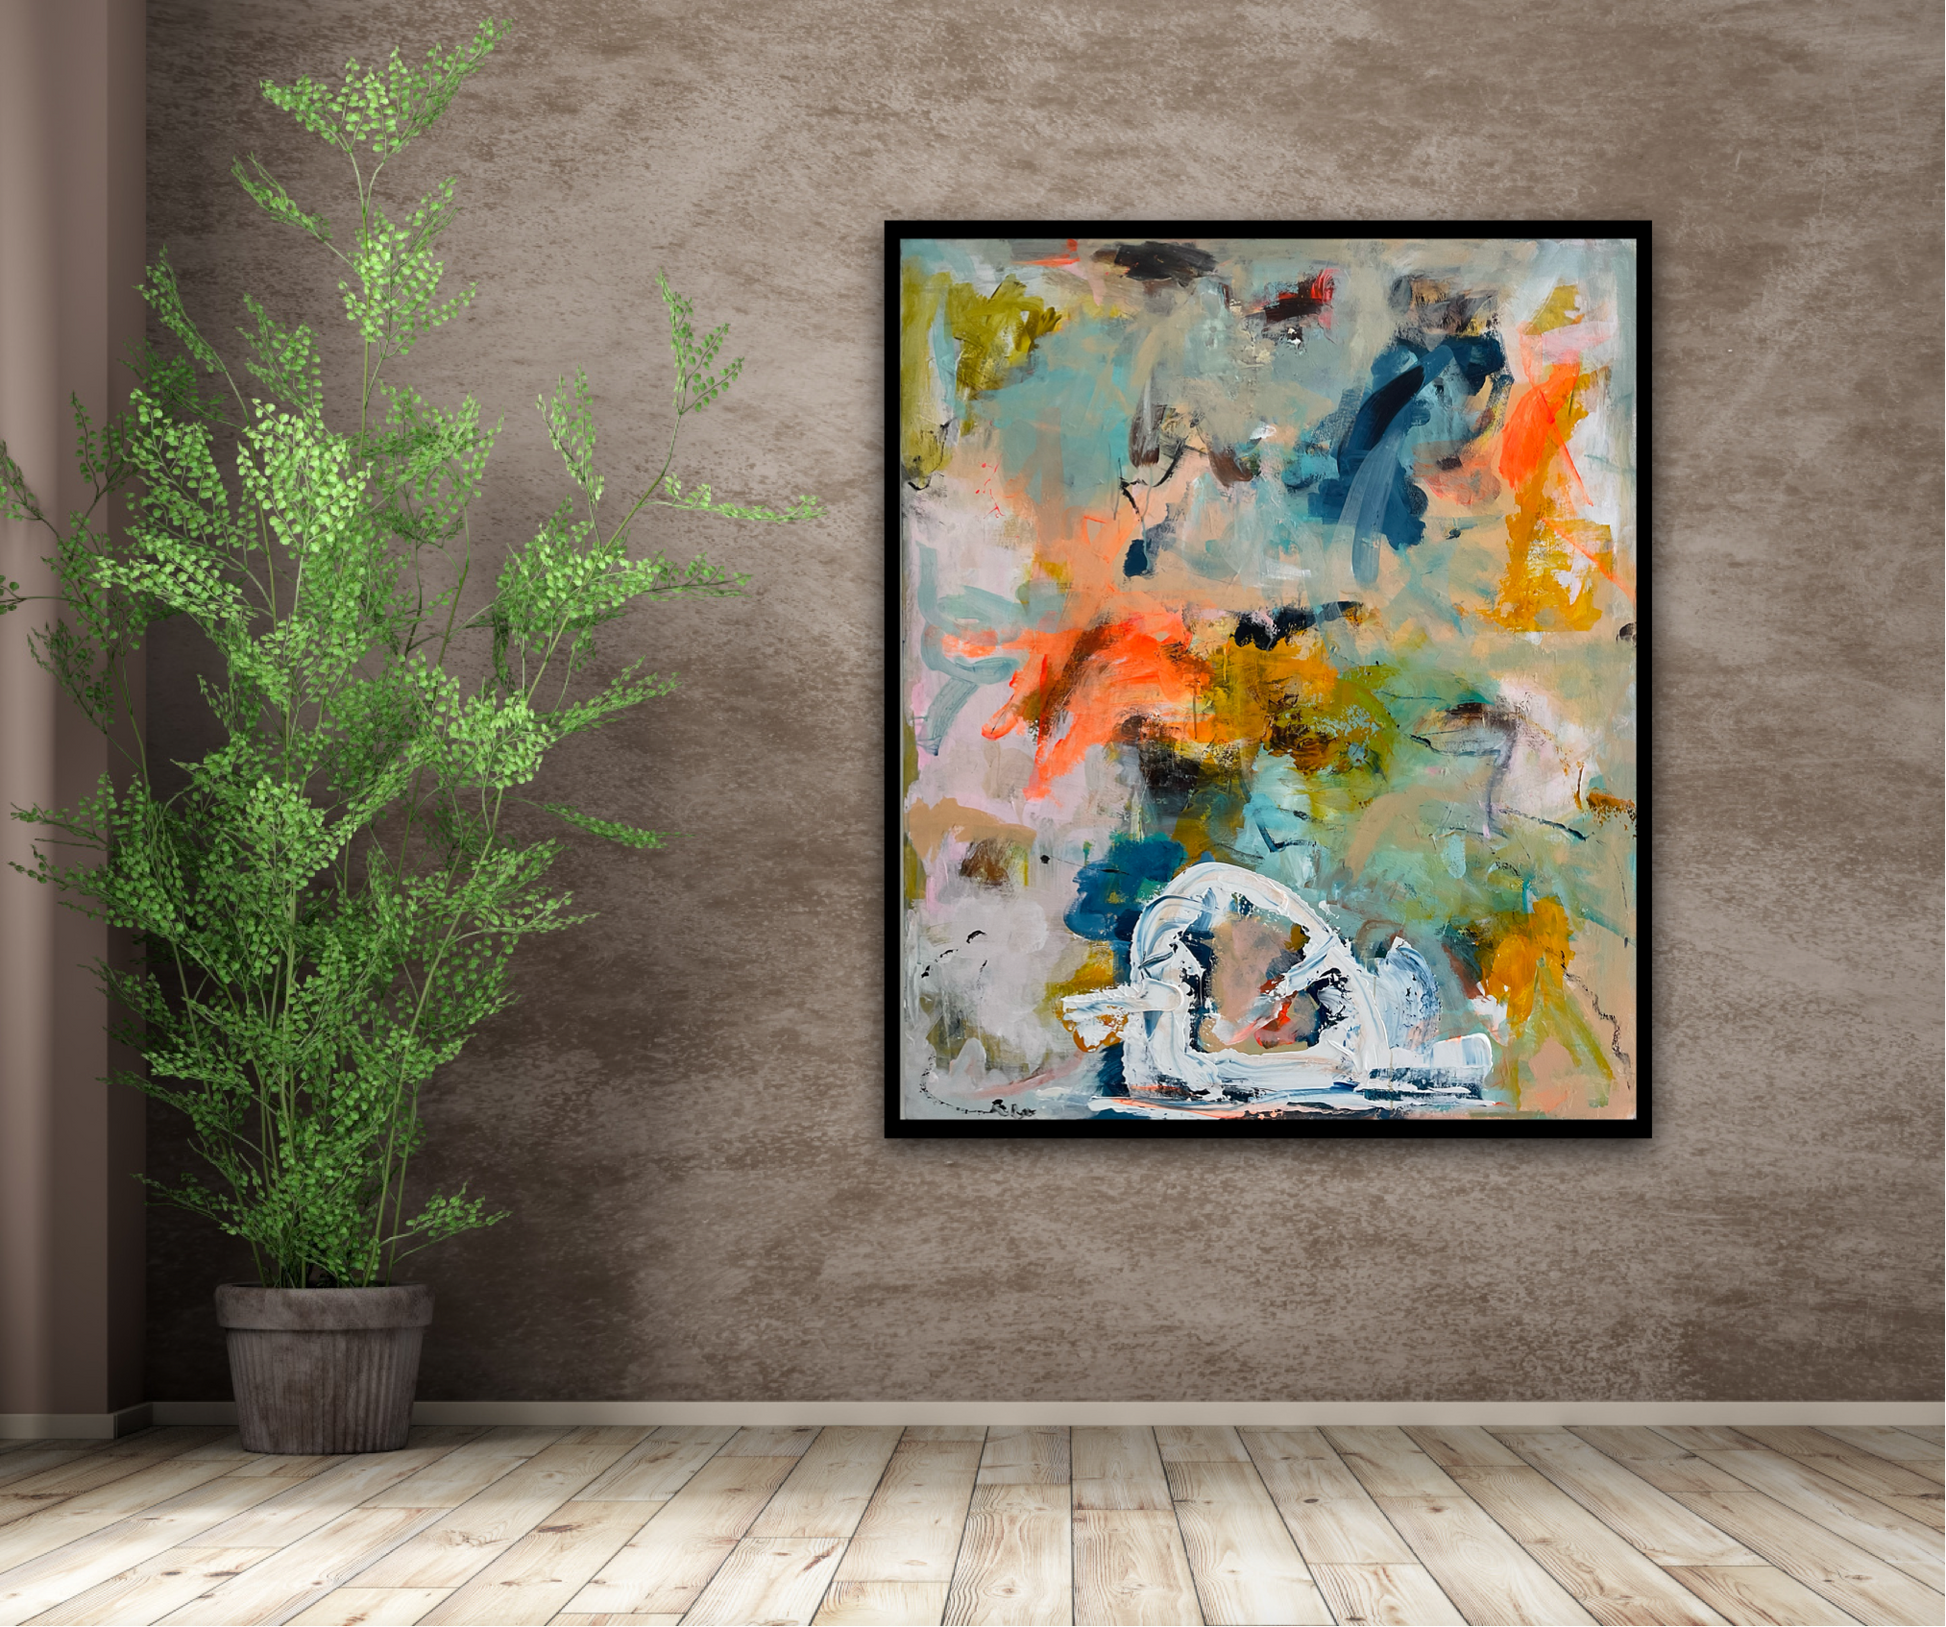 Abstrakt maleri, 120x100 cm, "A world full of colors" by Lone Reedtz , Abstrakt ekspressivt akrylmaleri på lærred Med sort svæveramme